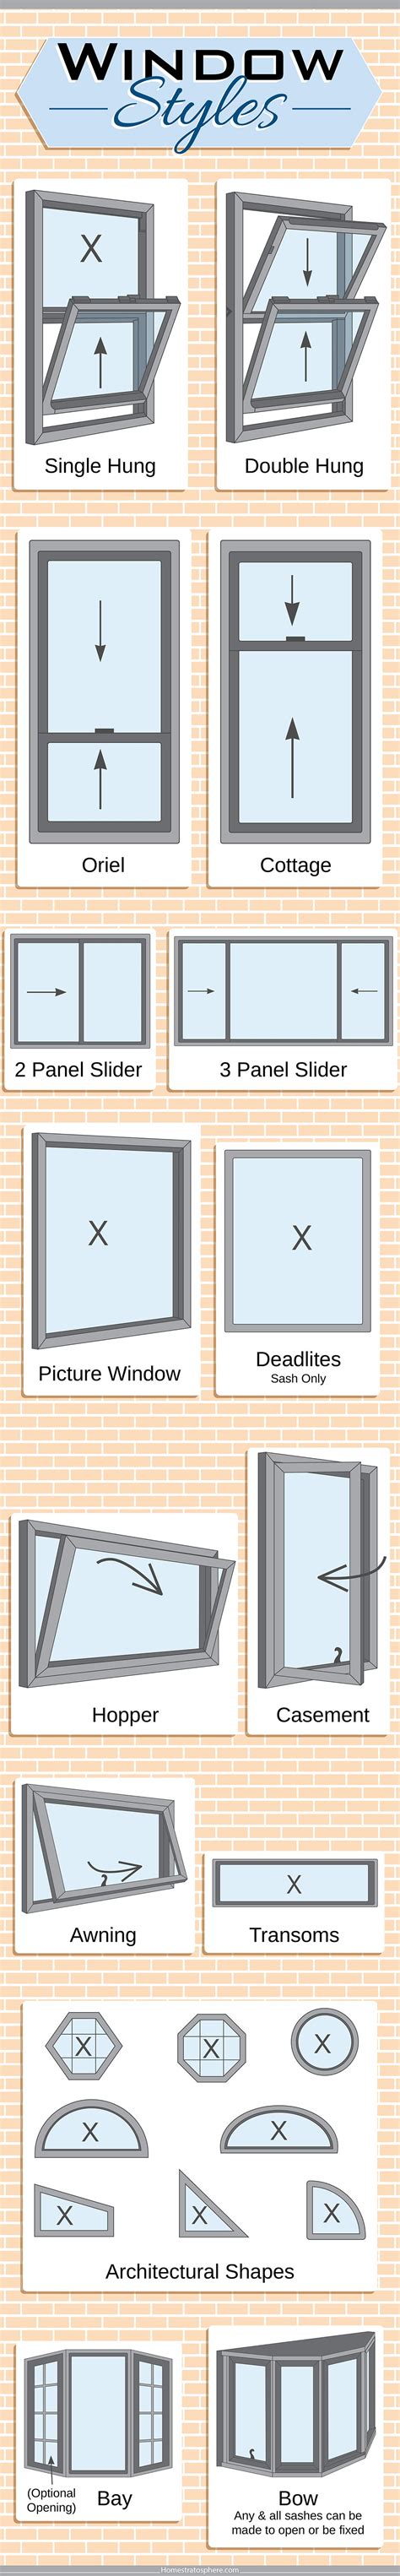 types  windows   home featuring descriptive diagrams window sizes